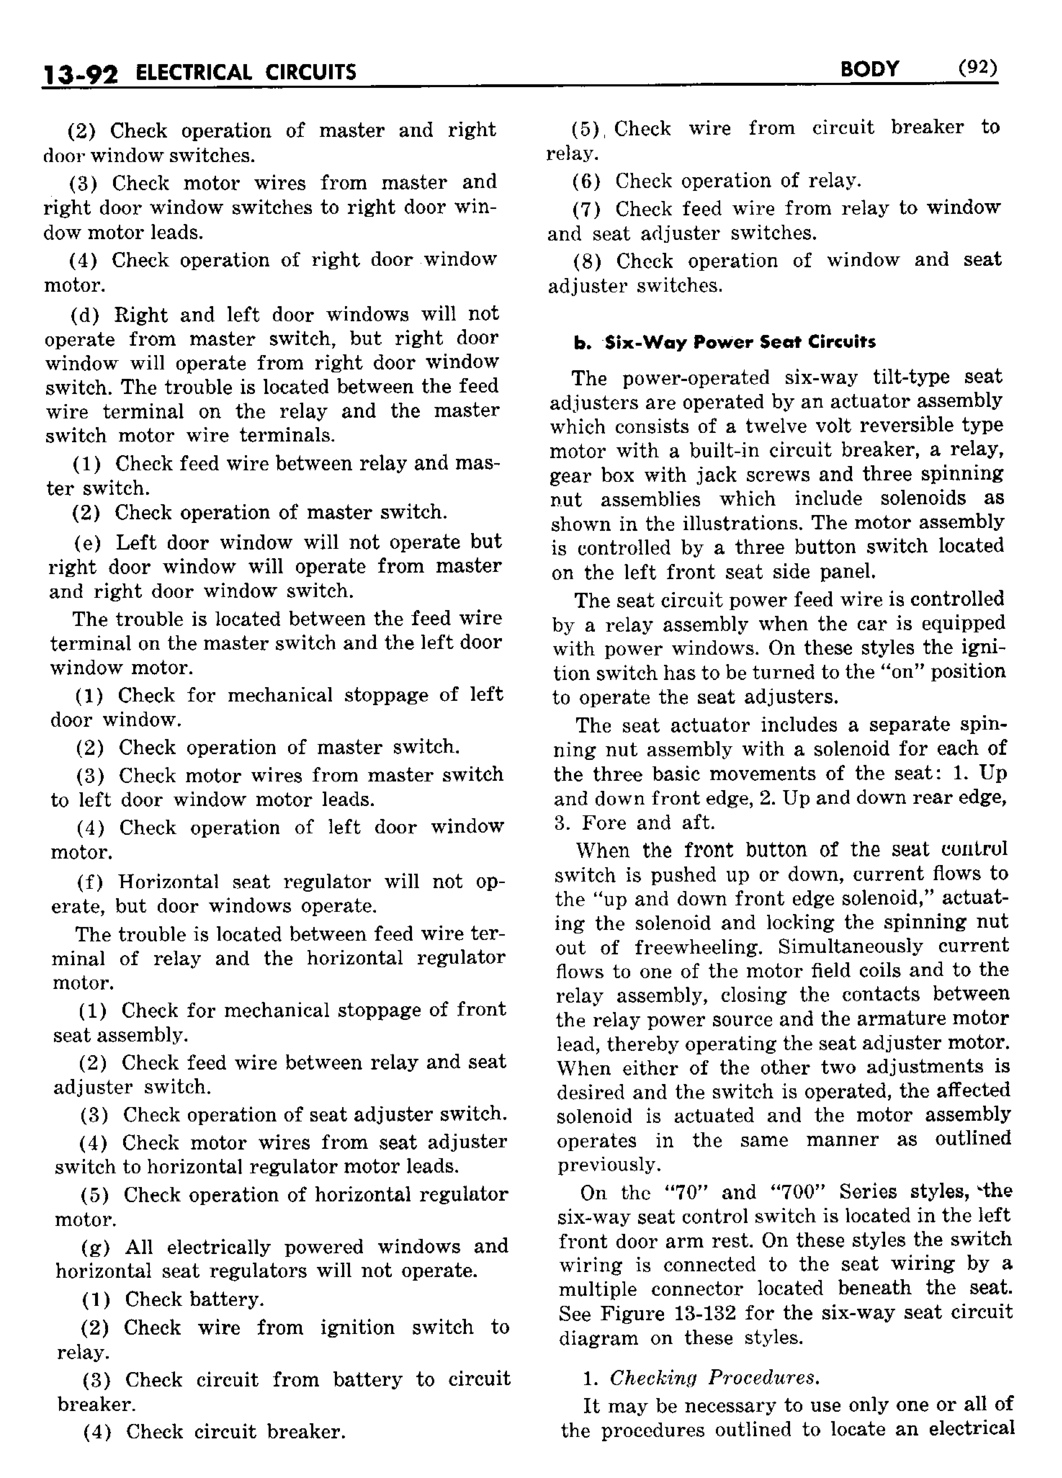 n_1958 Buick Body Service Manual-093-093.jpg